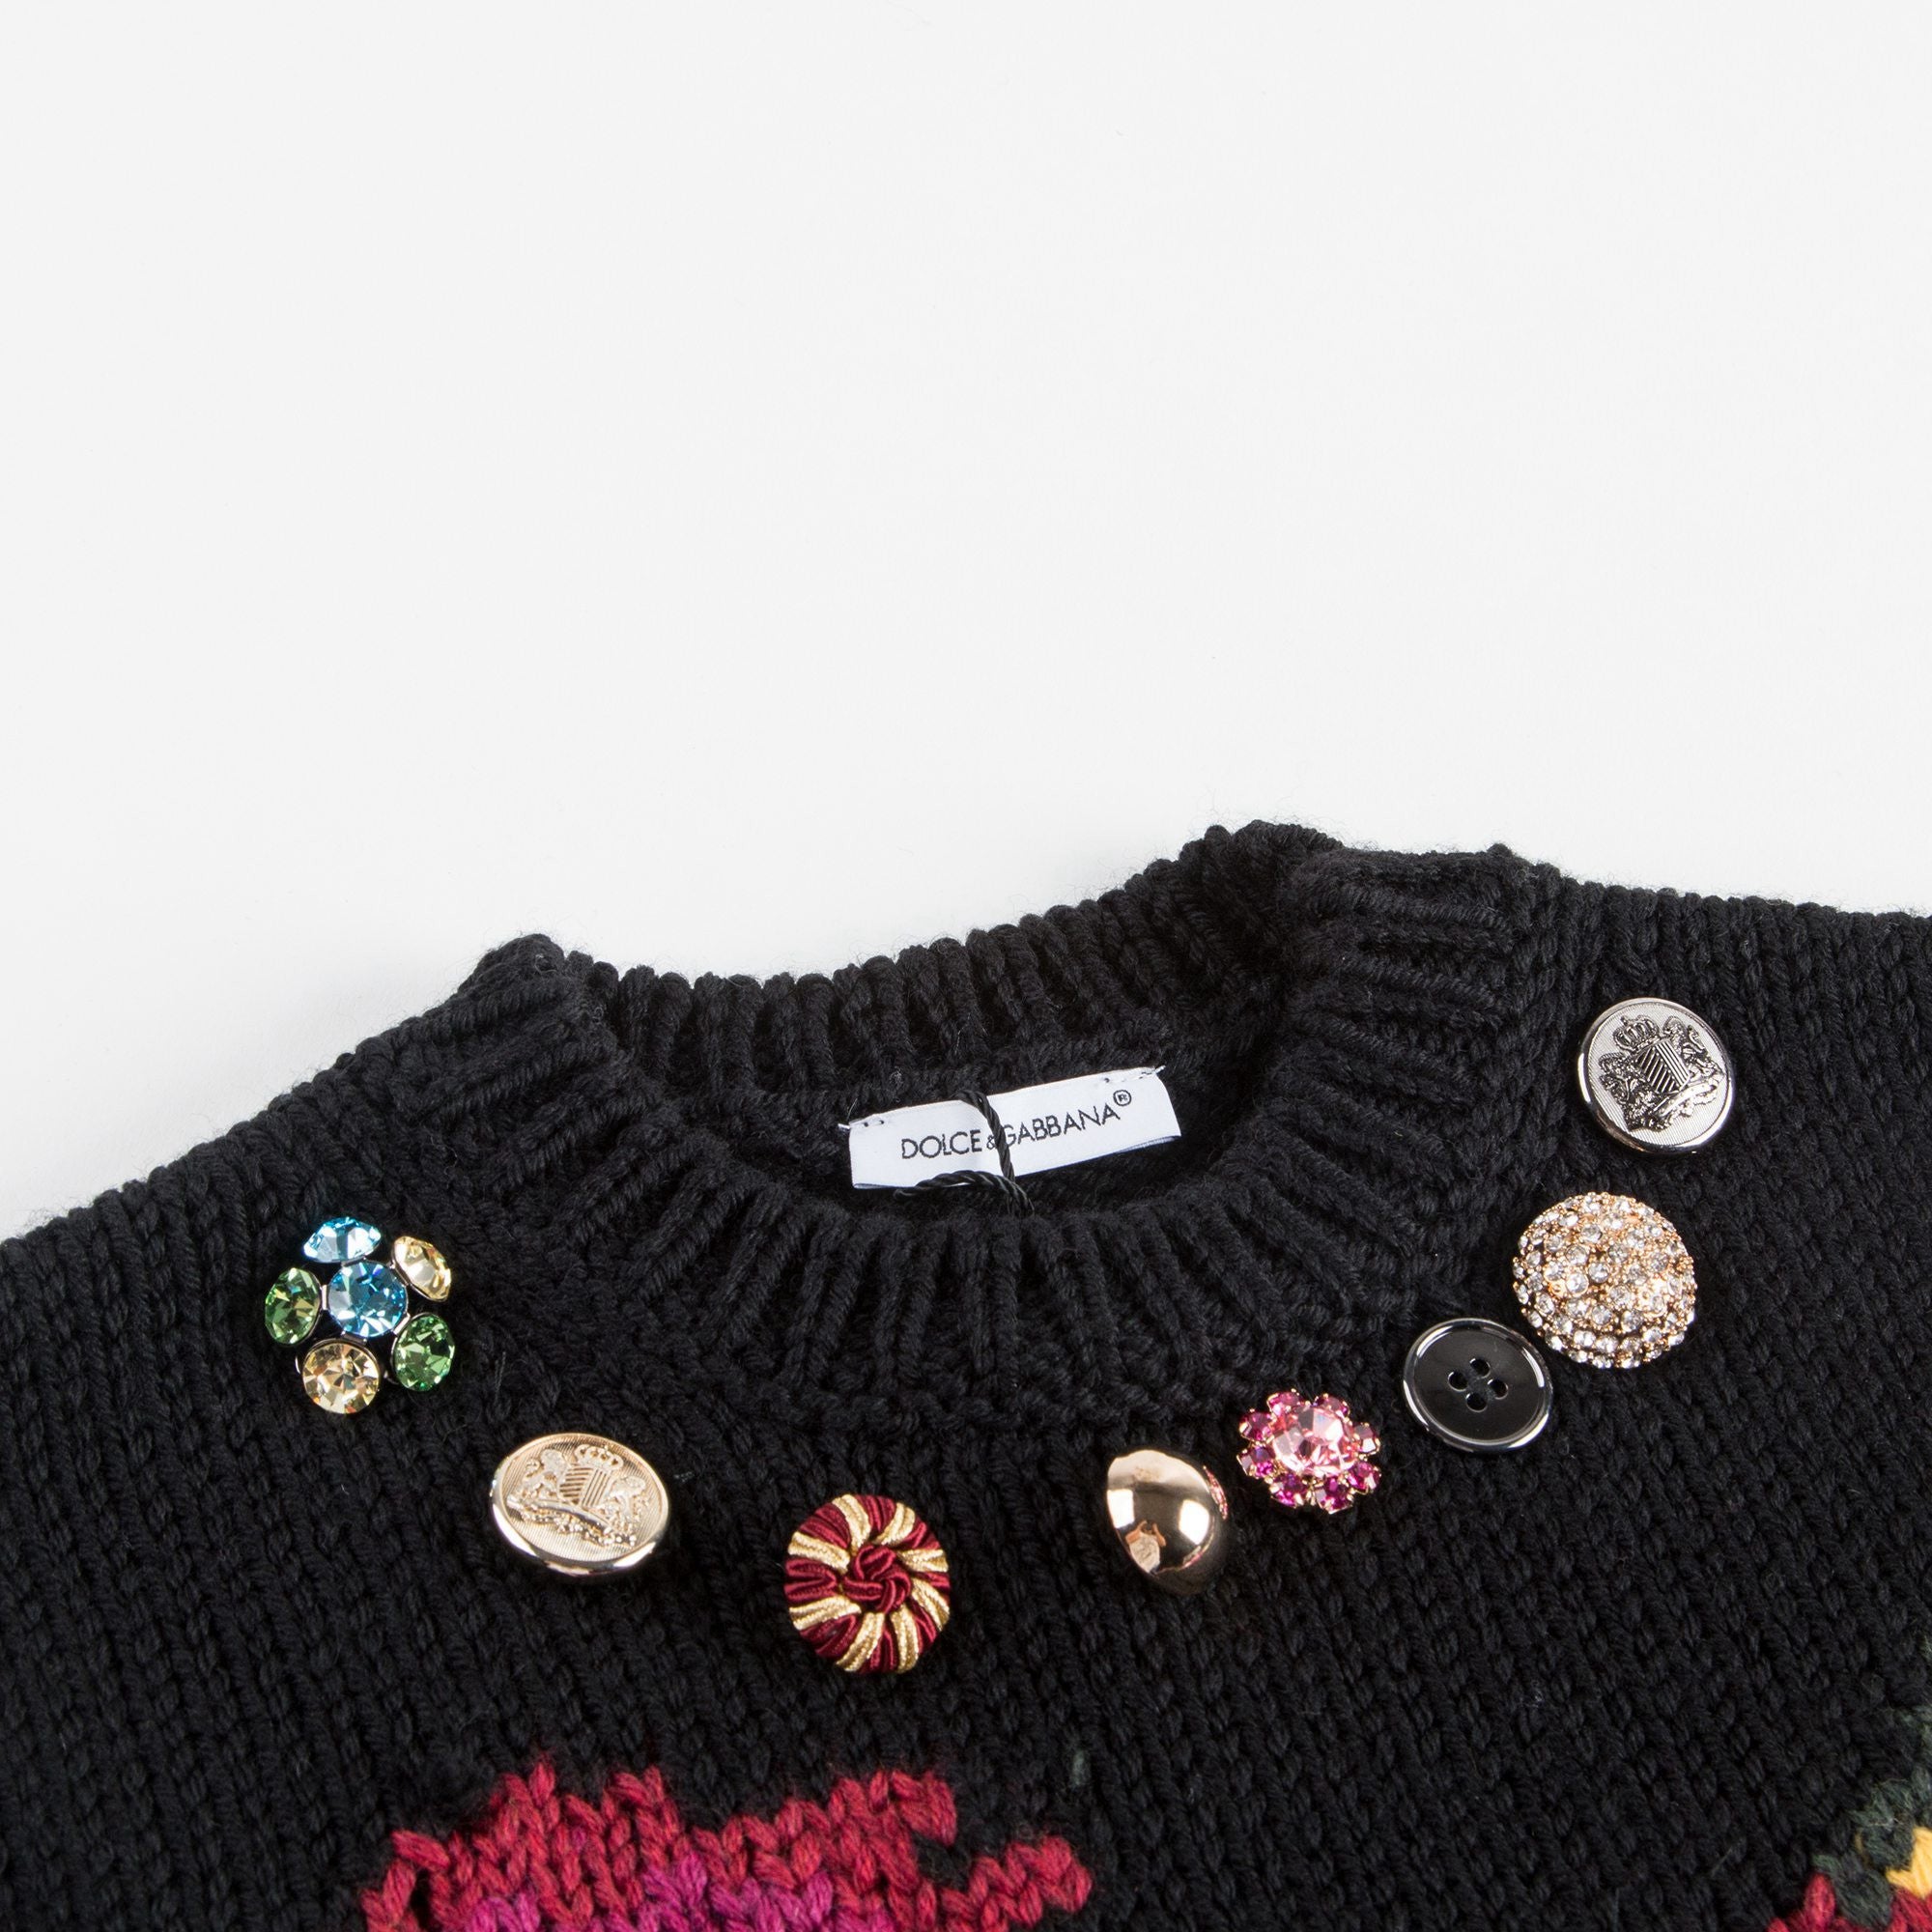 Girls Black Flowers Sweater